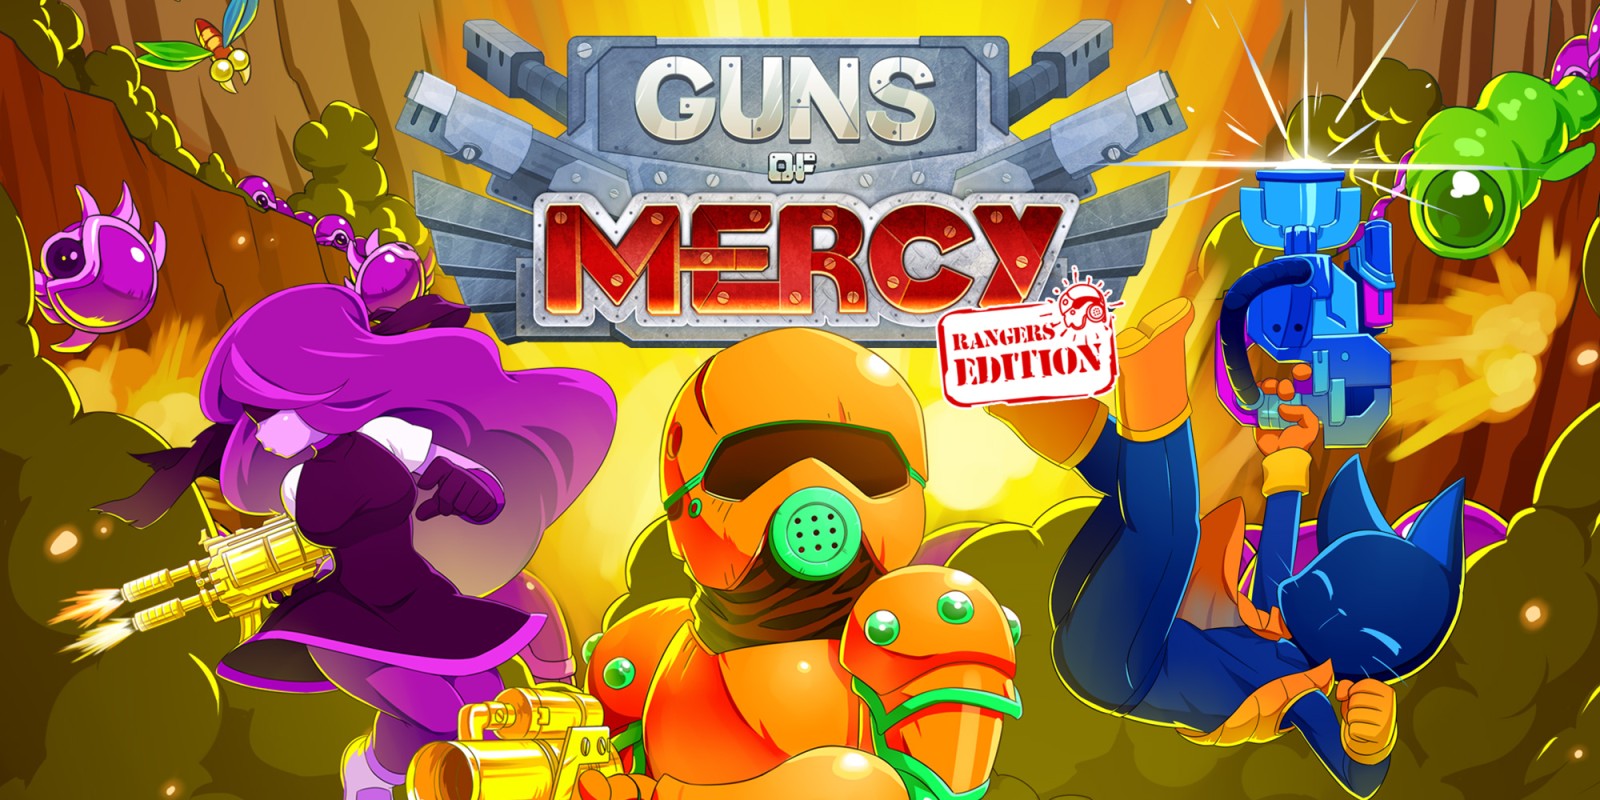 Guns of Mercy - Rangers Edition